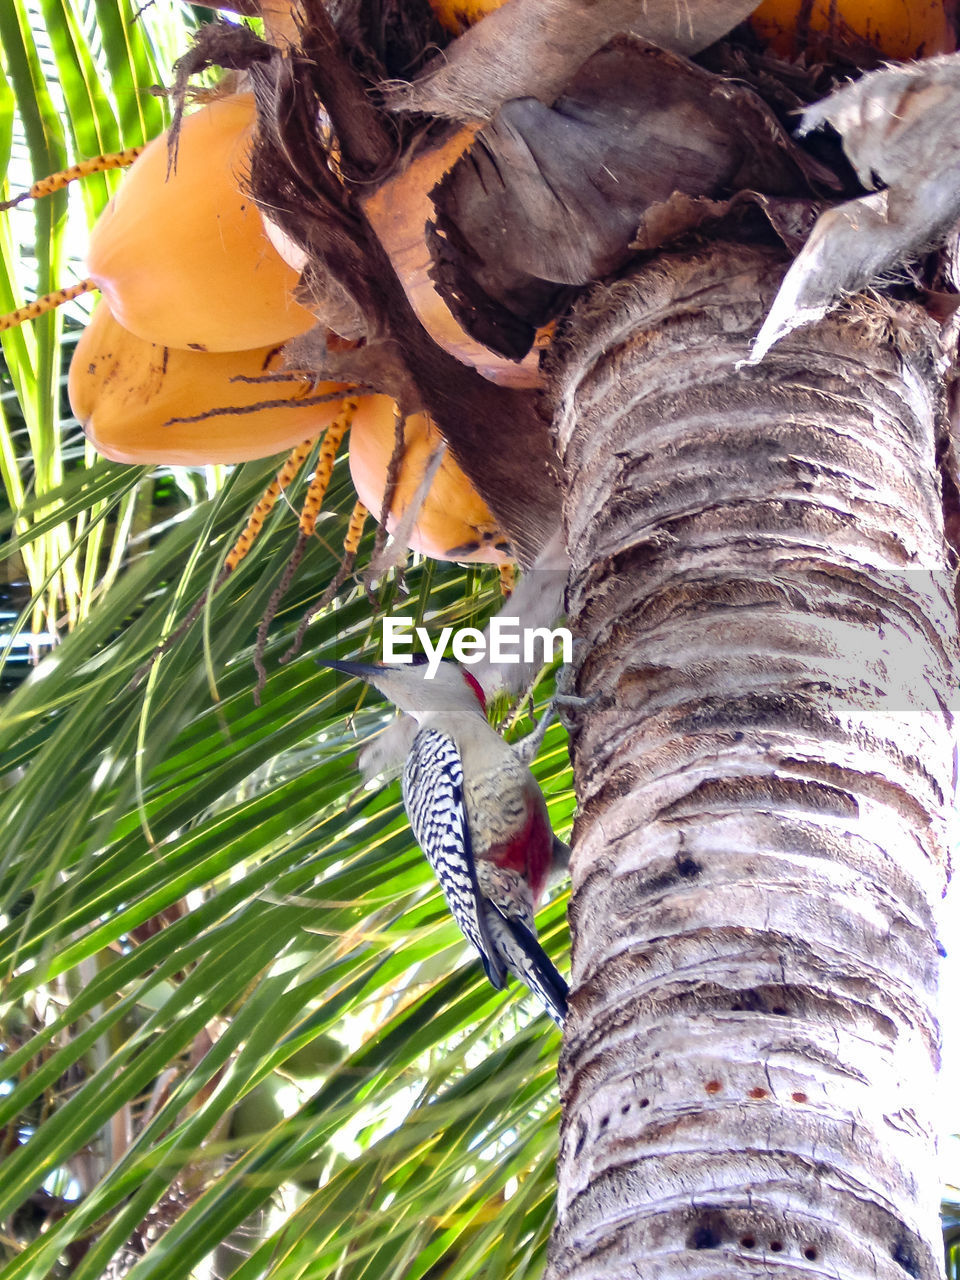 CLOSE-UP OF BIRD ON TREE TRUNK